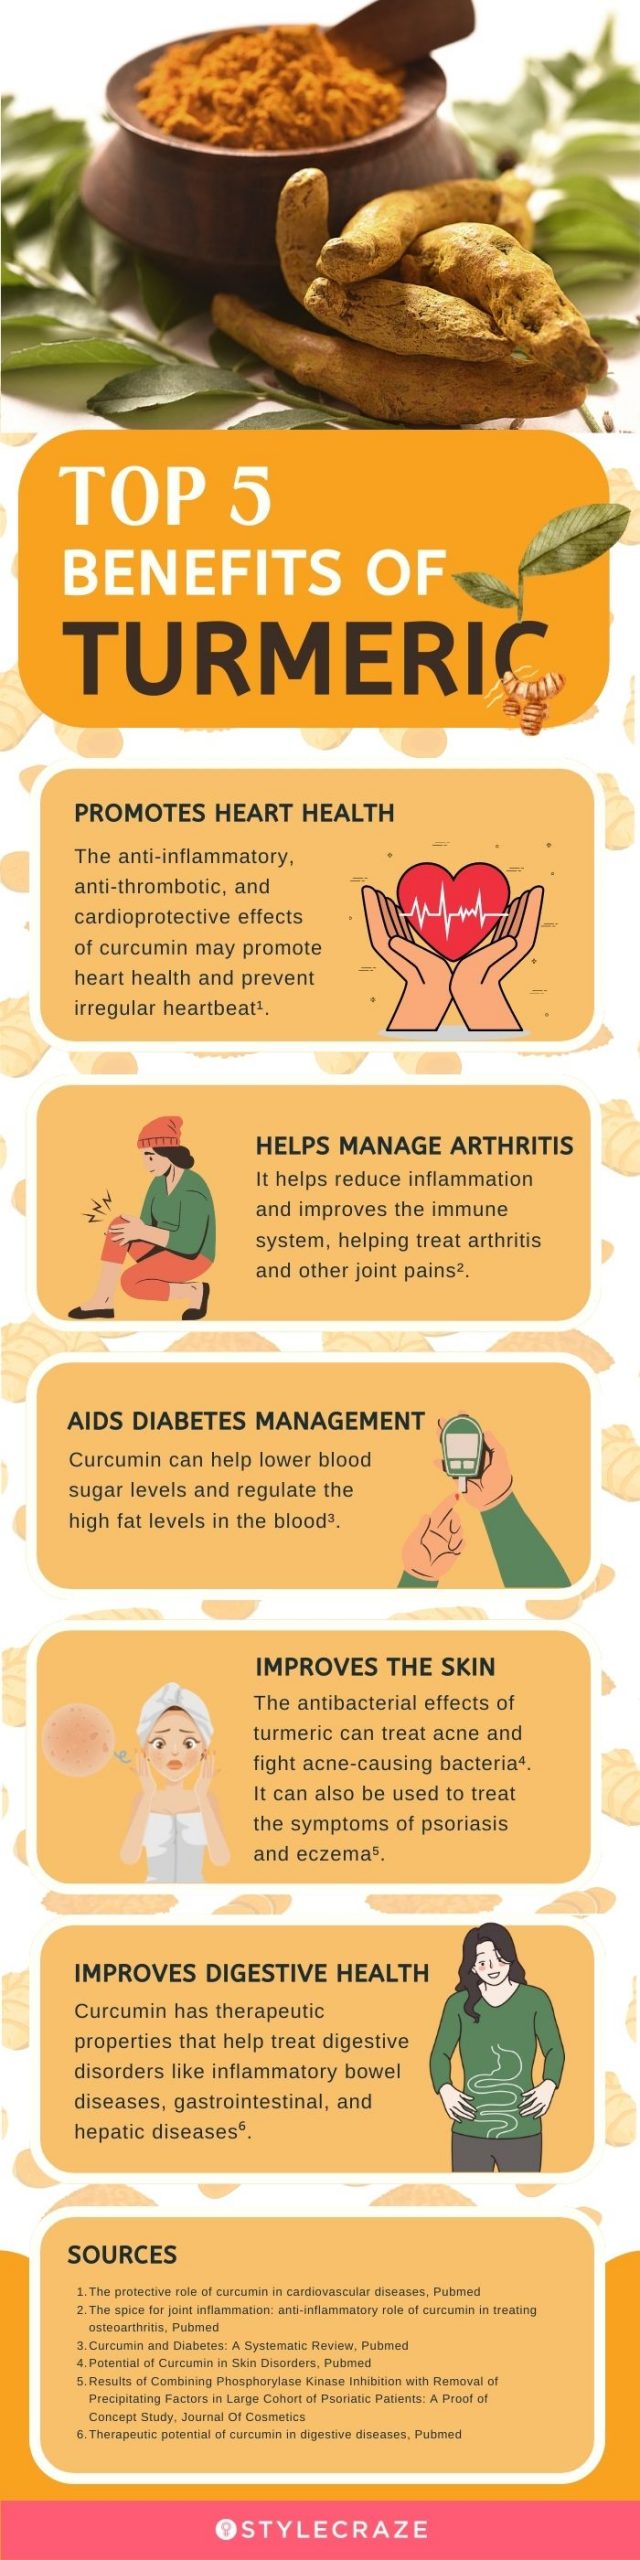 top 5 benefits of turmeric [infographic]